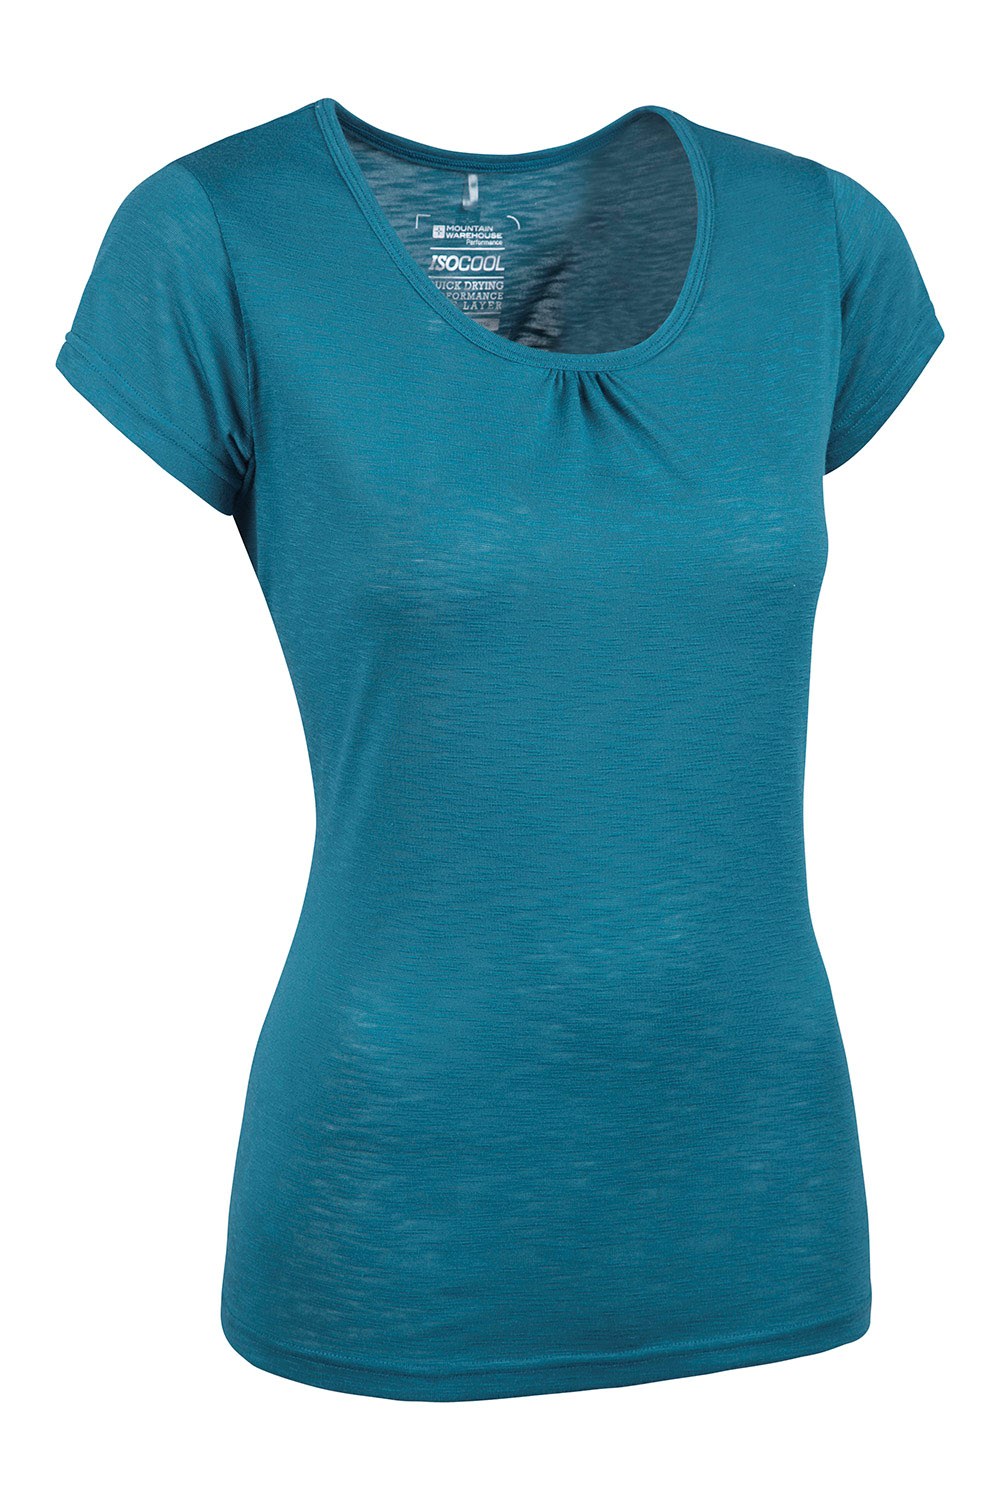 Mountain Warehouse Mountain Warehouse Womens Slub T-Shirt  2 Pack Ladies Breathable Regular Fit Top 